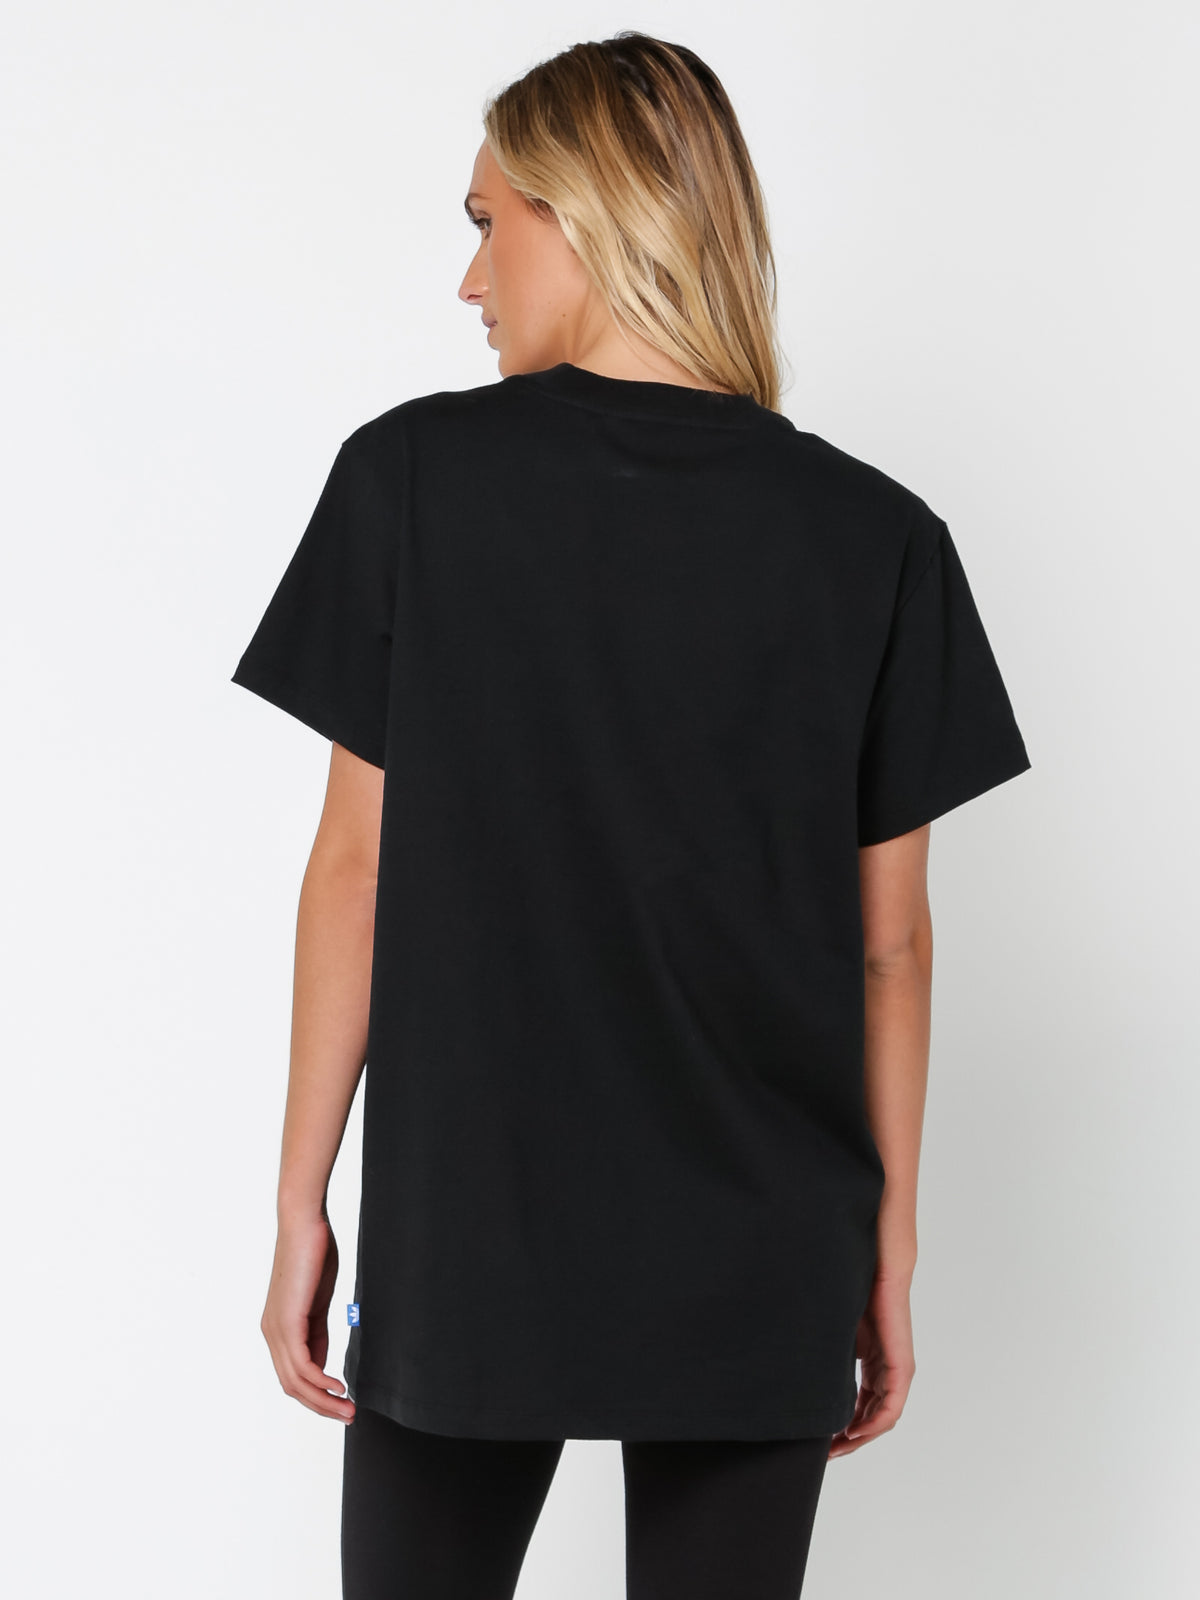 Big Trefoil T-Shirt in Black